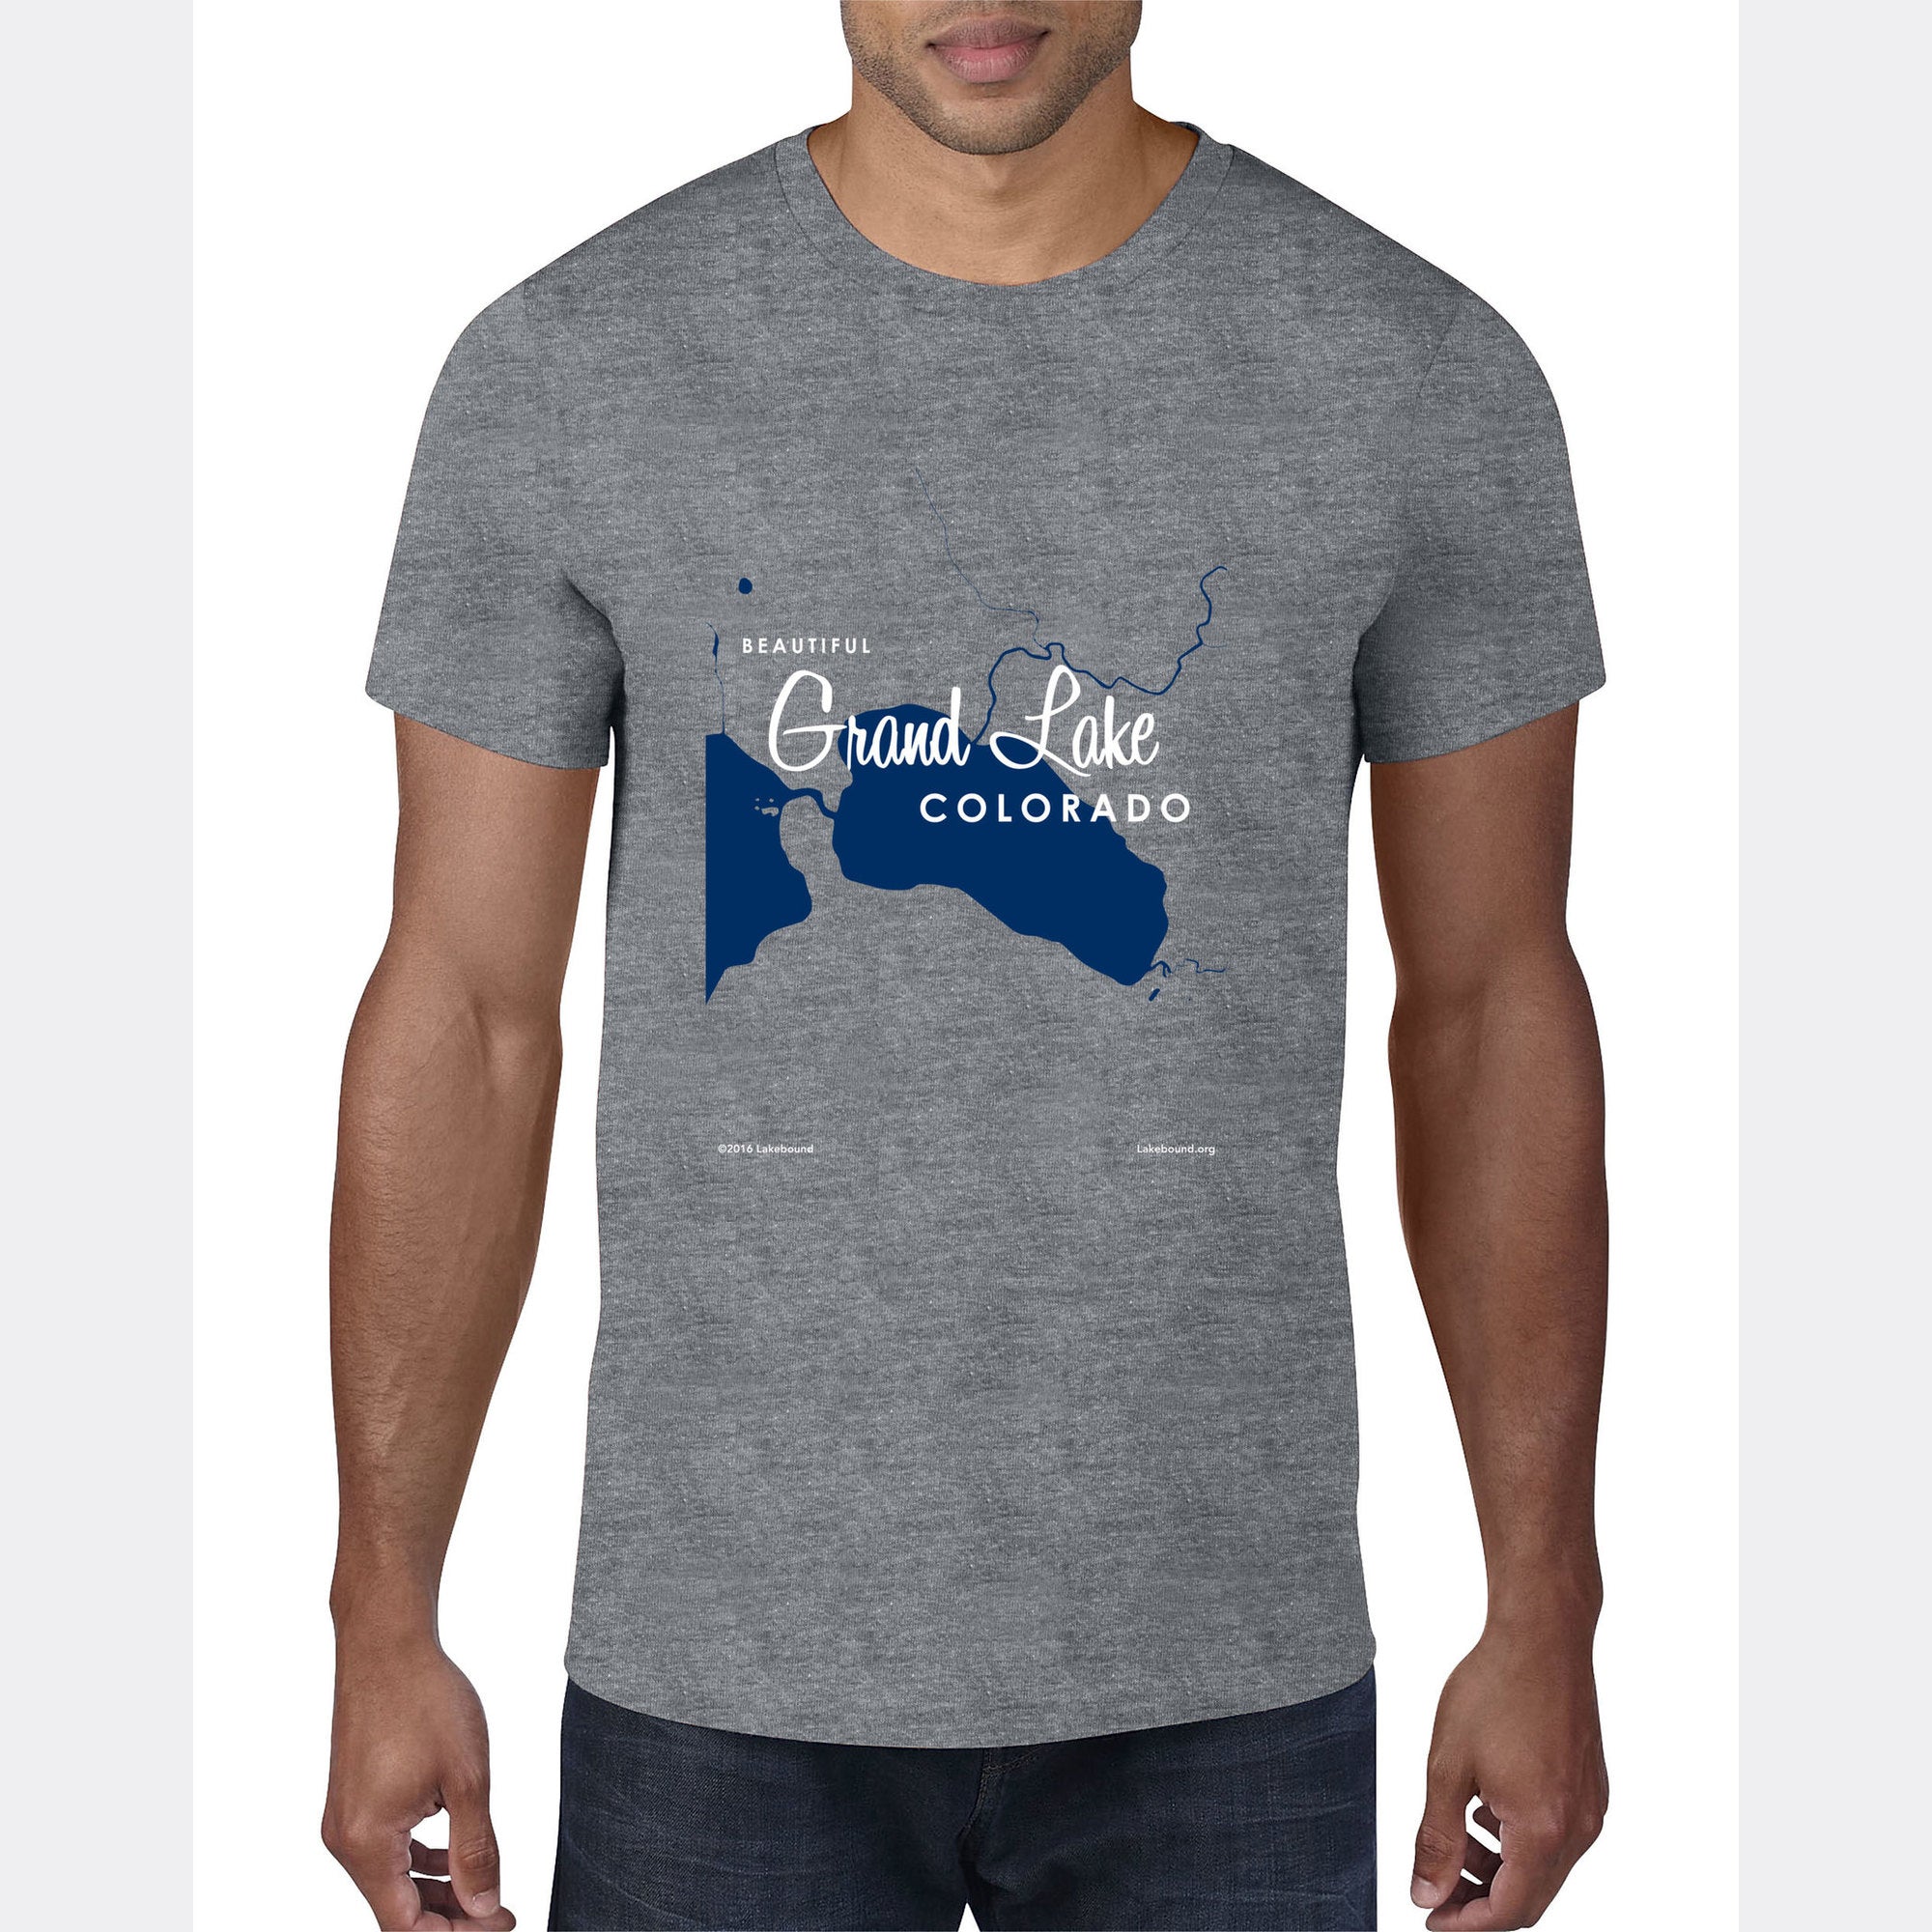 Grand Lake Colorado, T-Shirt